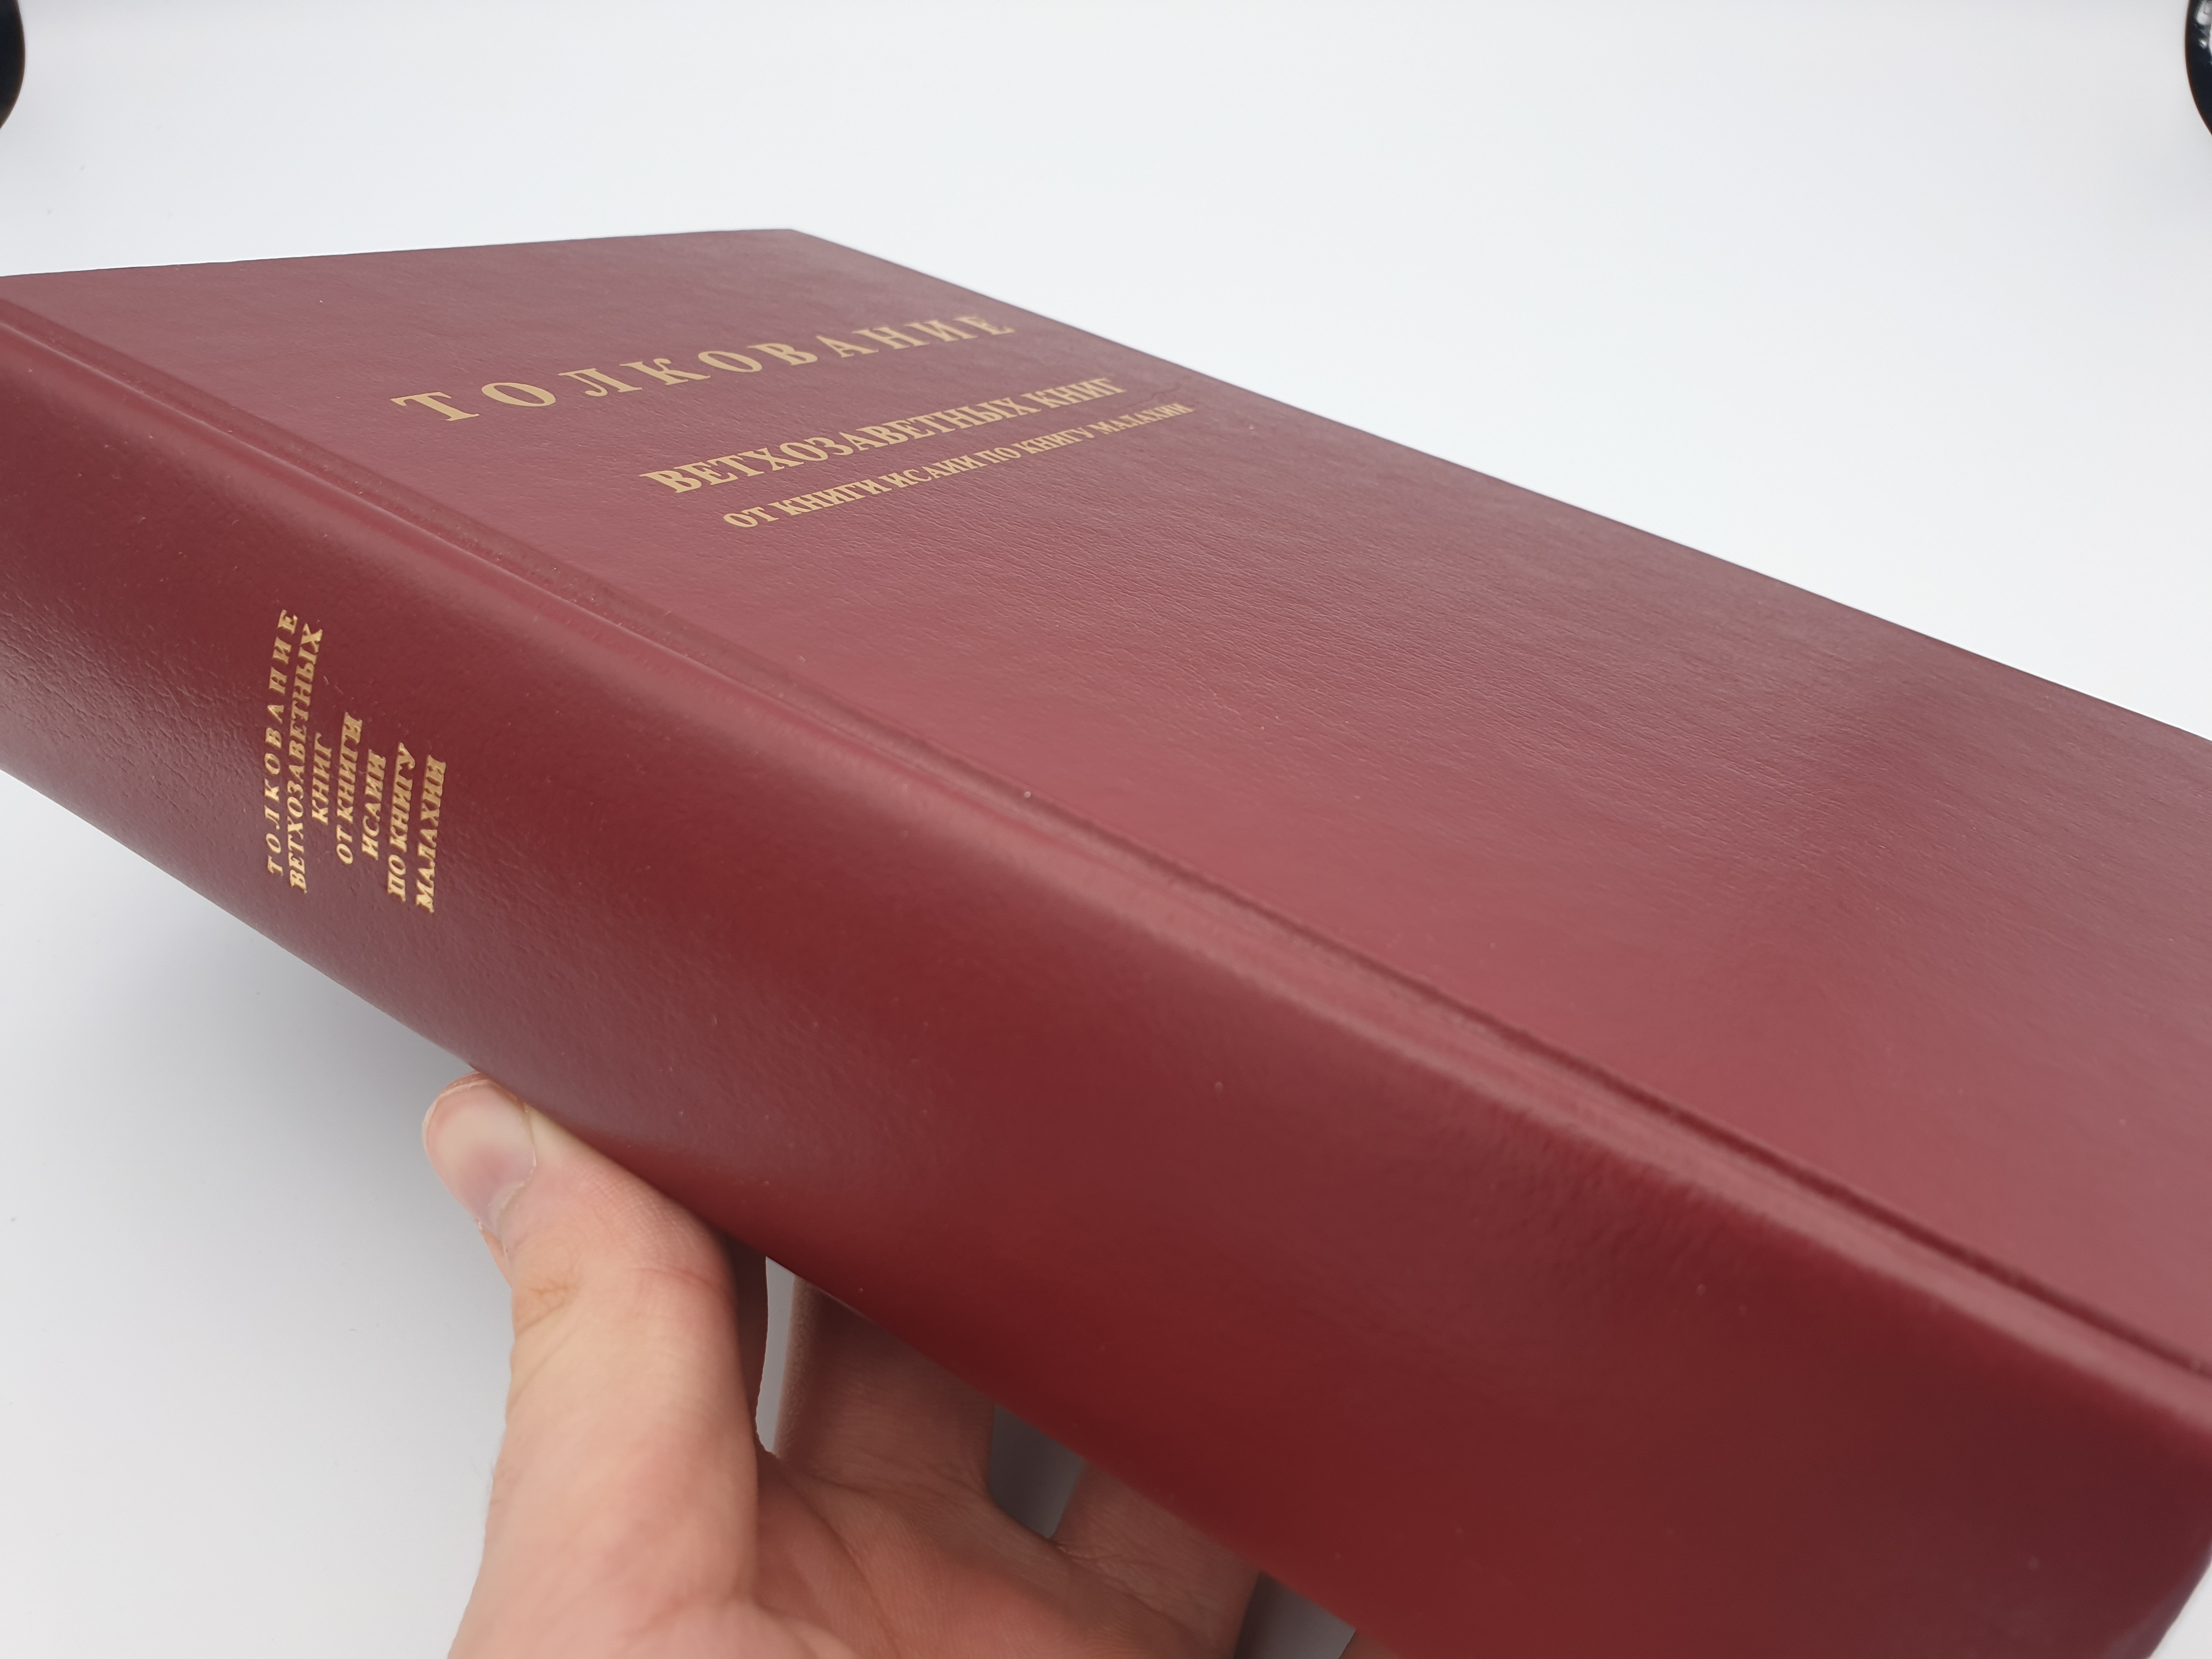 Толкование ветхозаветных книг - Russian edition of The Bible Knowledge Commentary 1